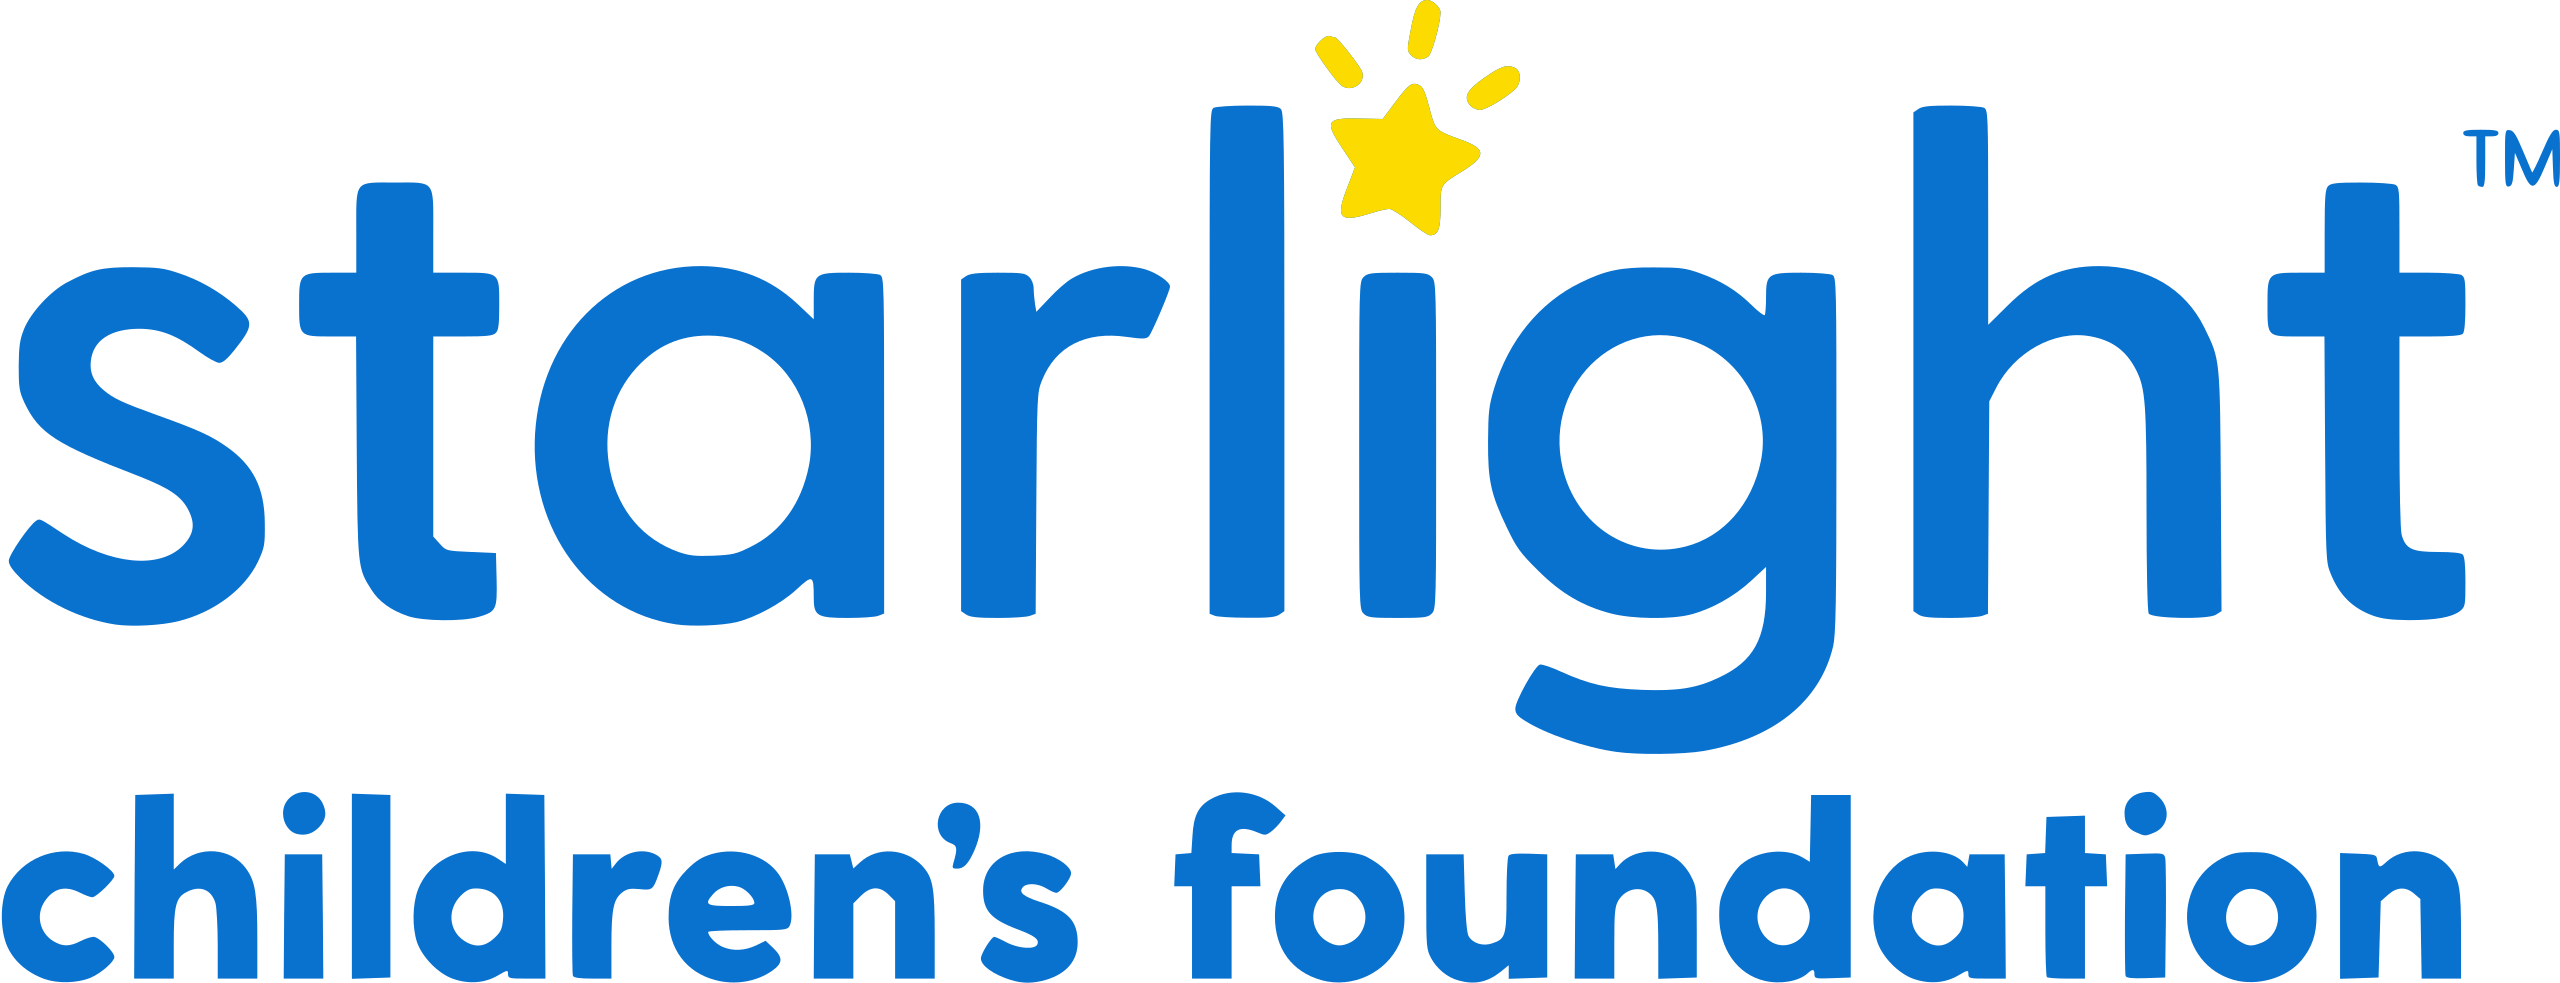 File:Starlight Children's Foundation logo.svg - Wikimedia Commons